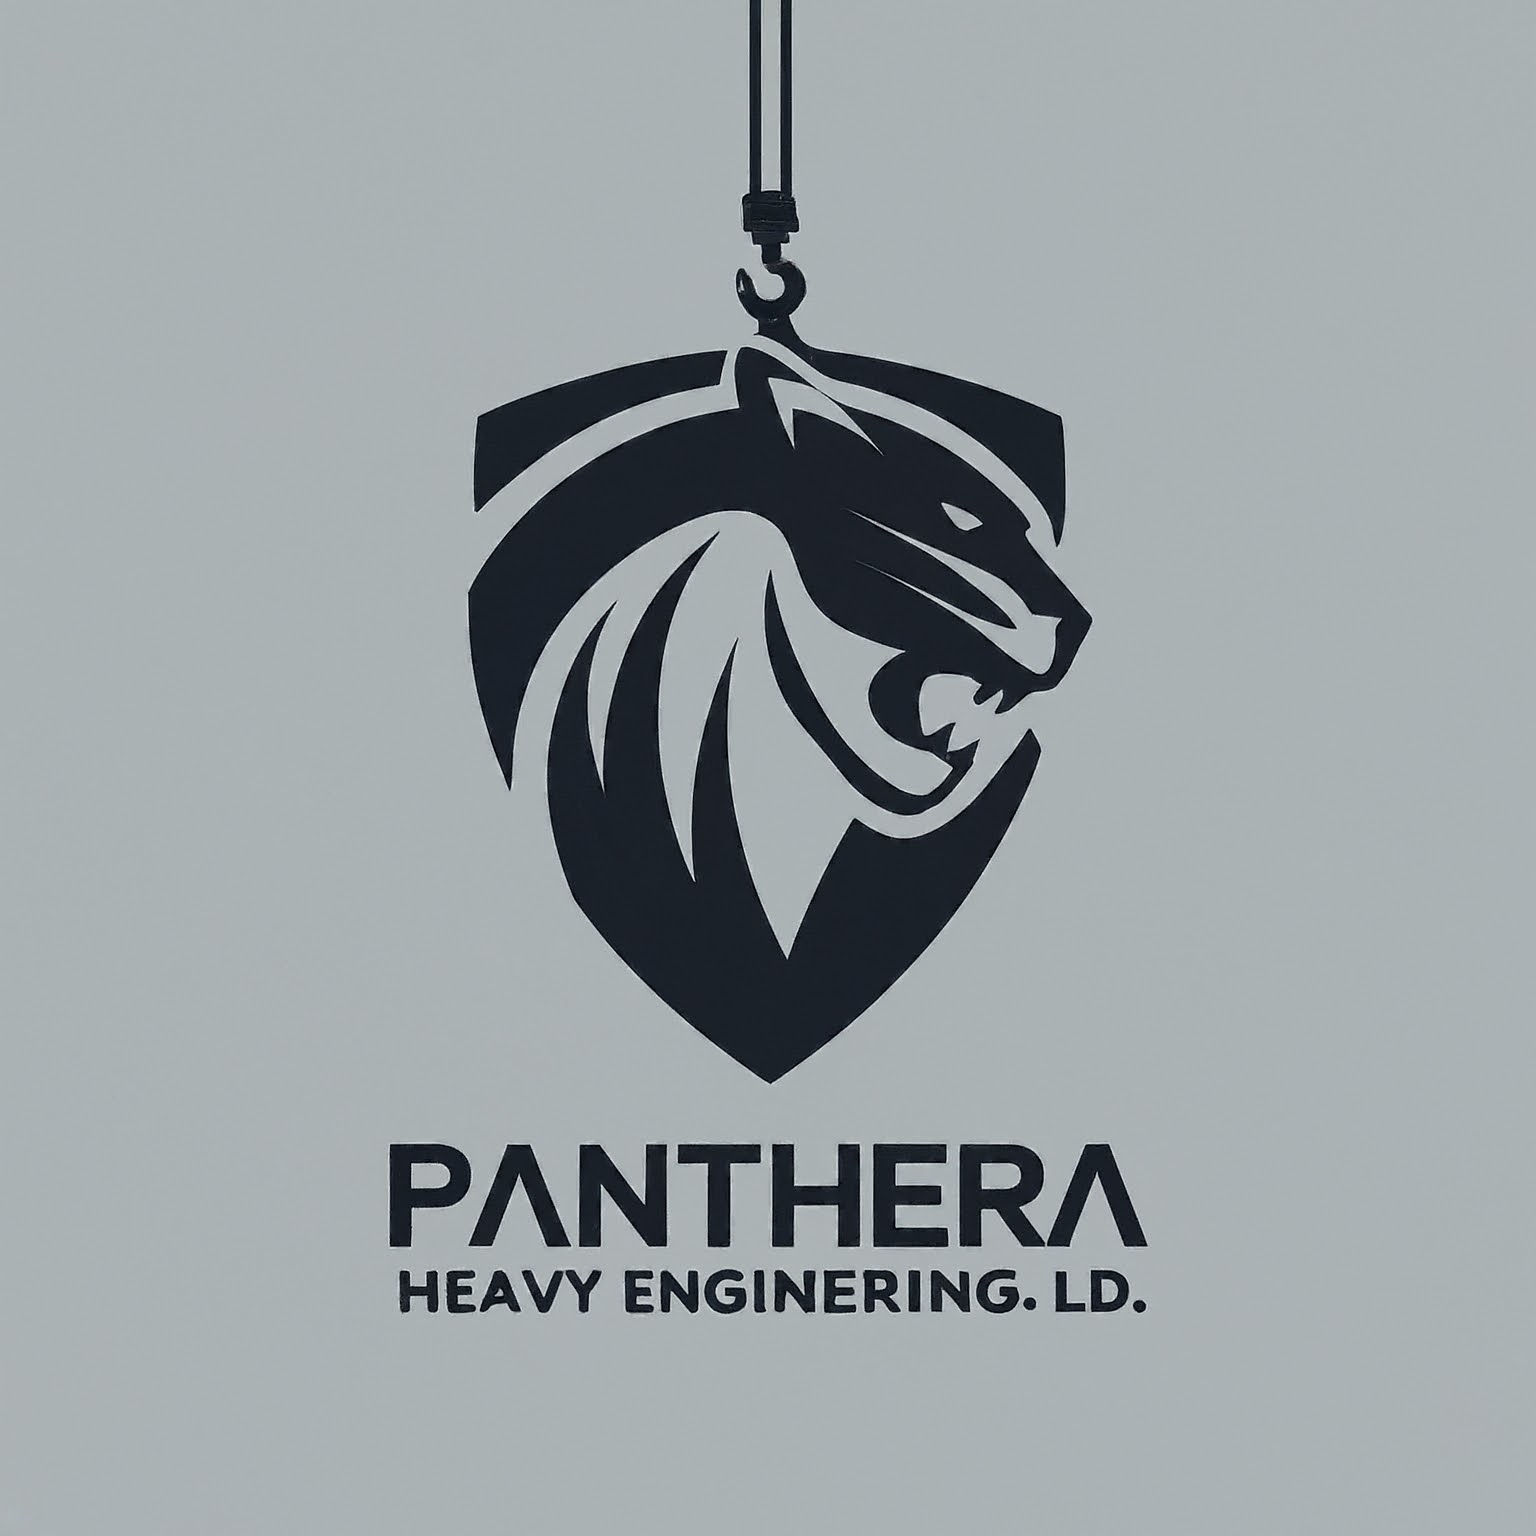 Panthera Heavy Engineering  Ltd.  